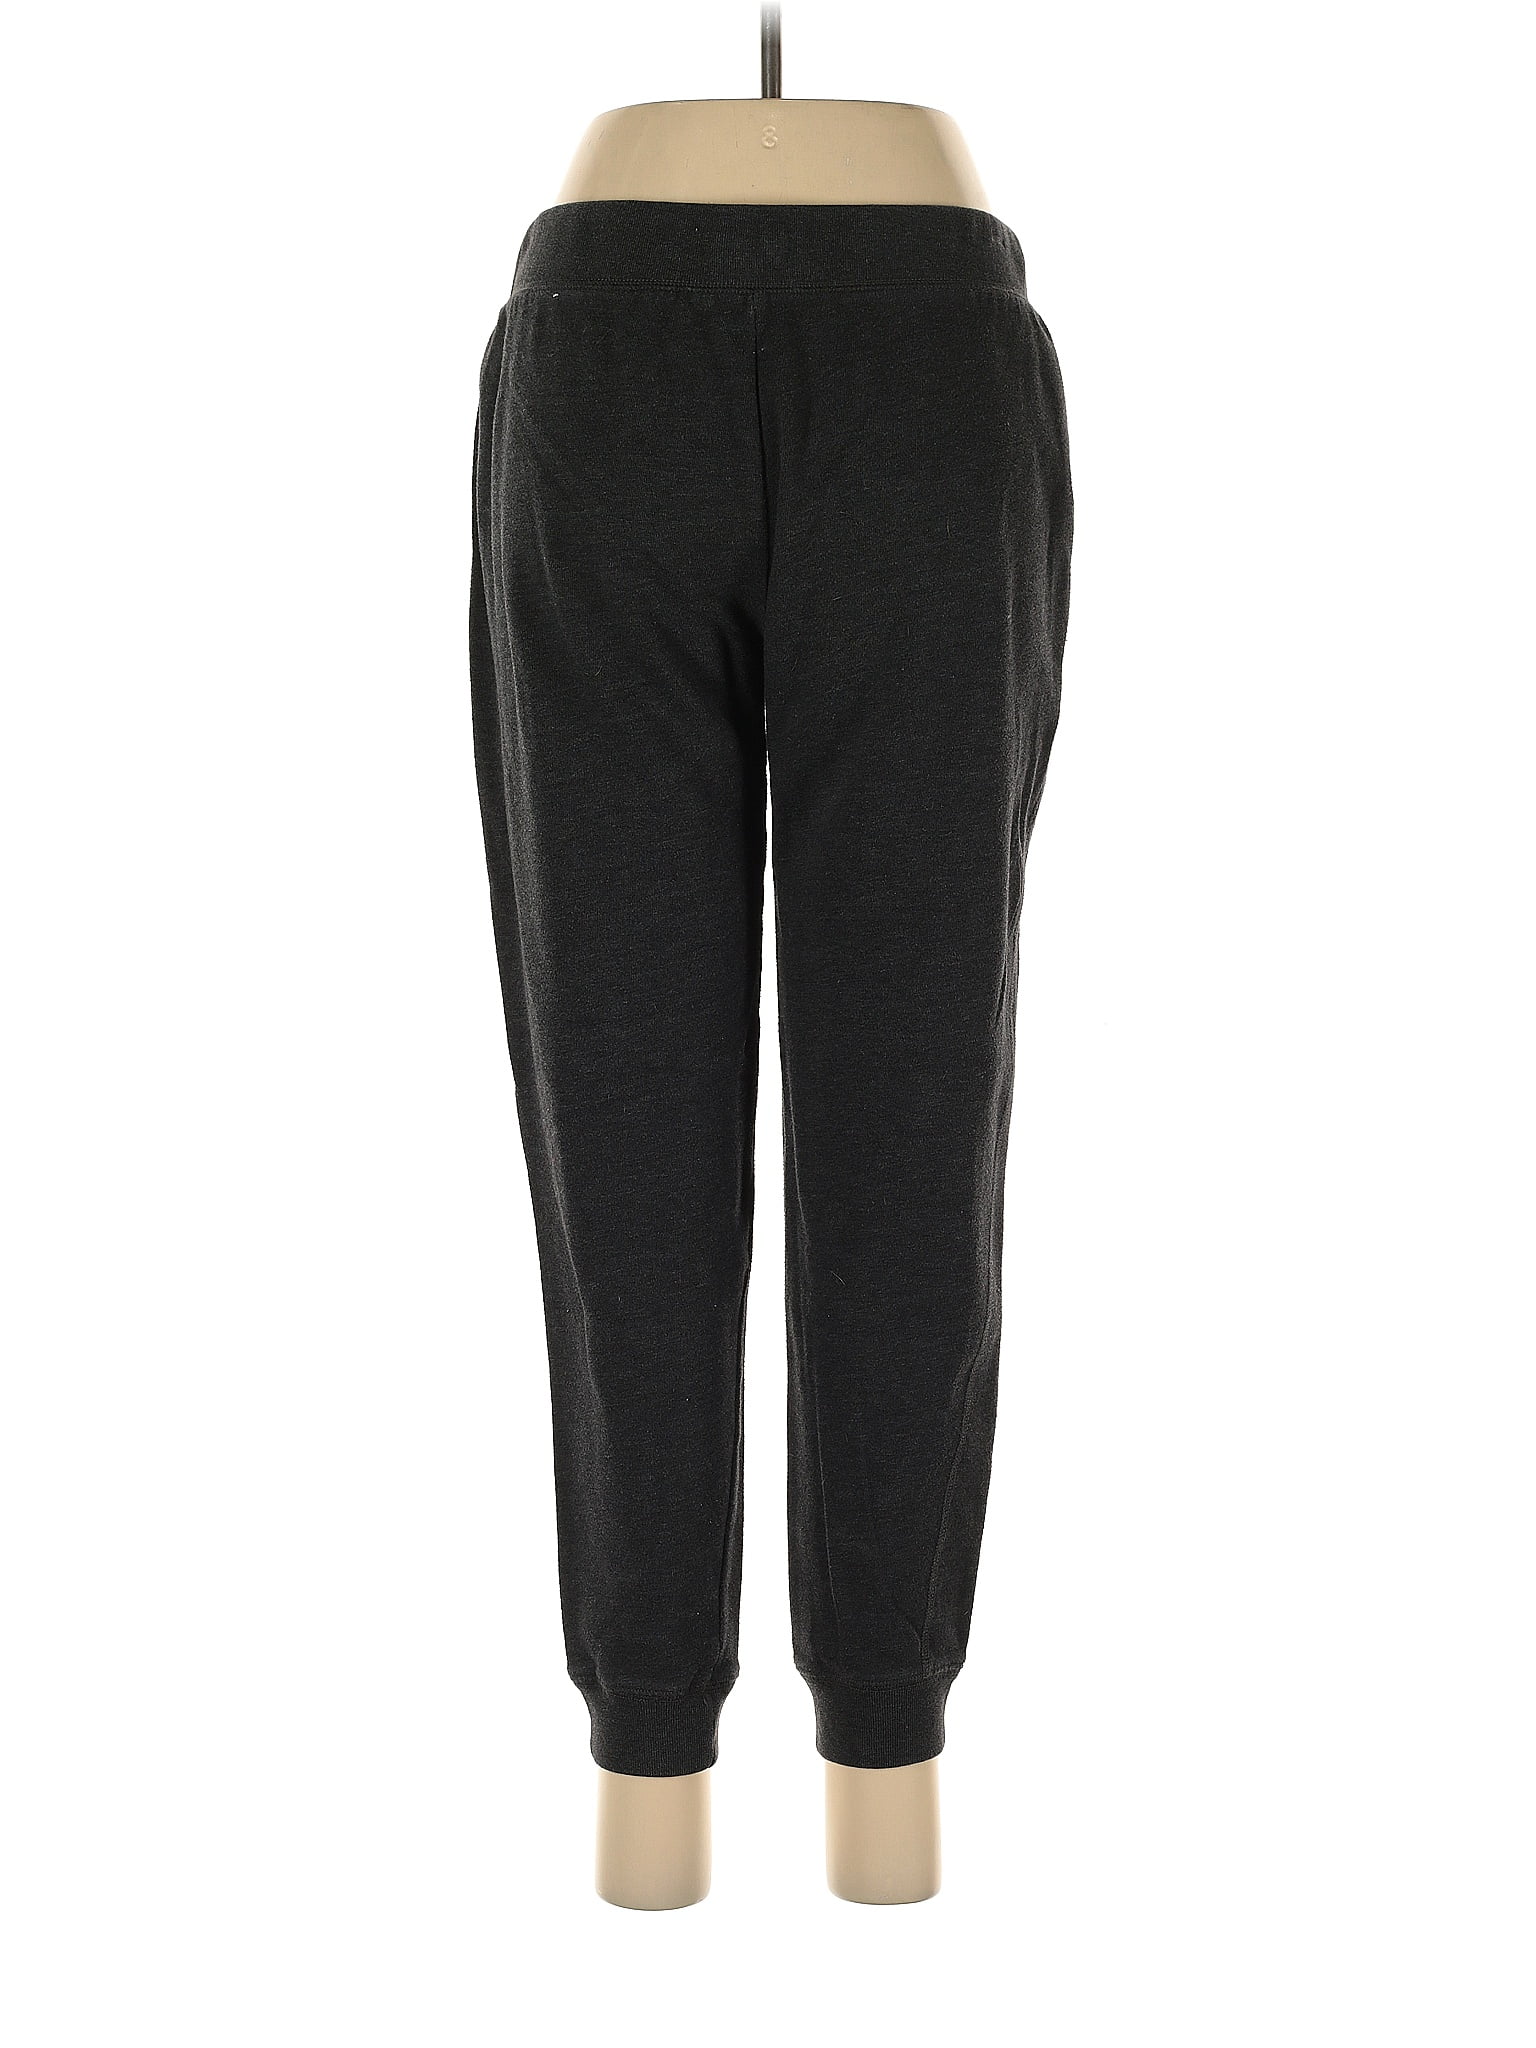 Aeropostale Sweatpants Black Size XL - $11 - From Natalie